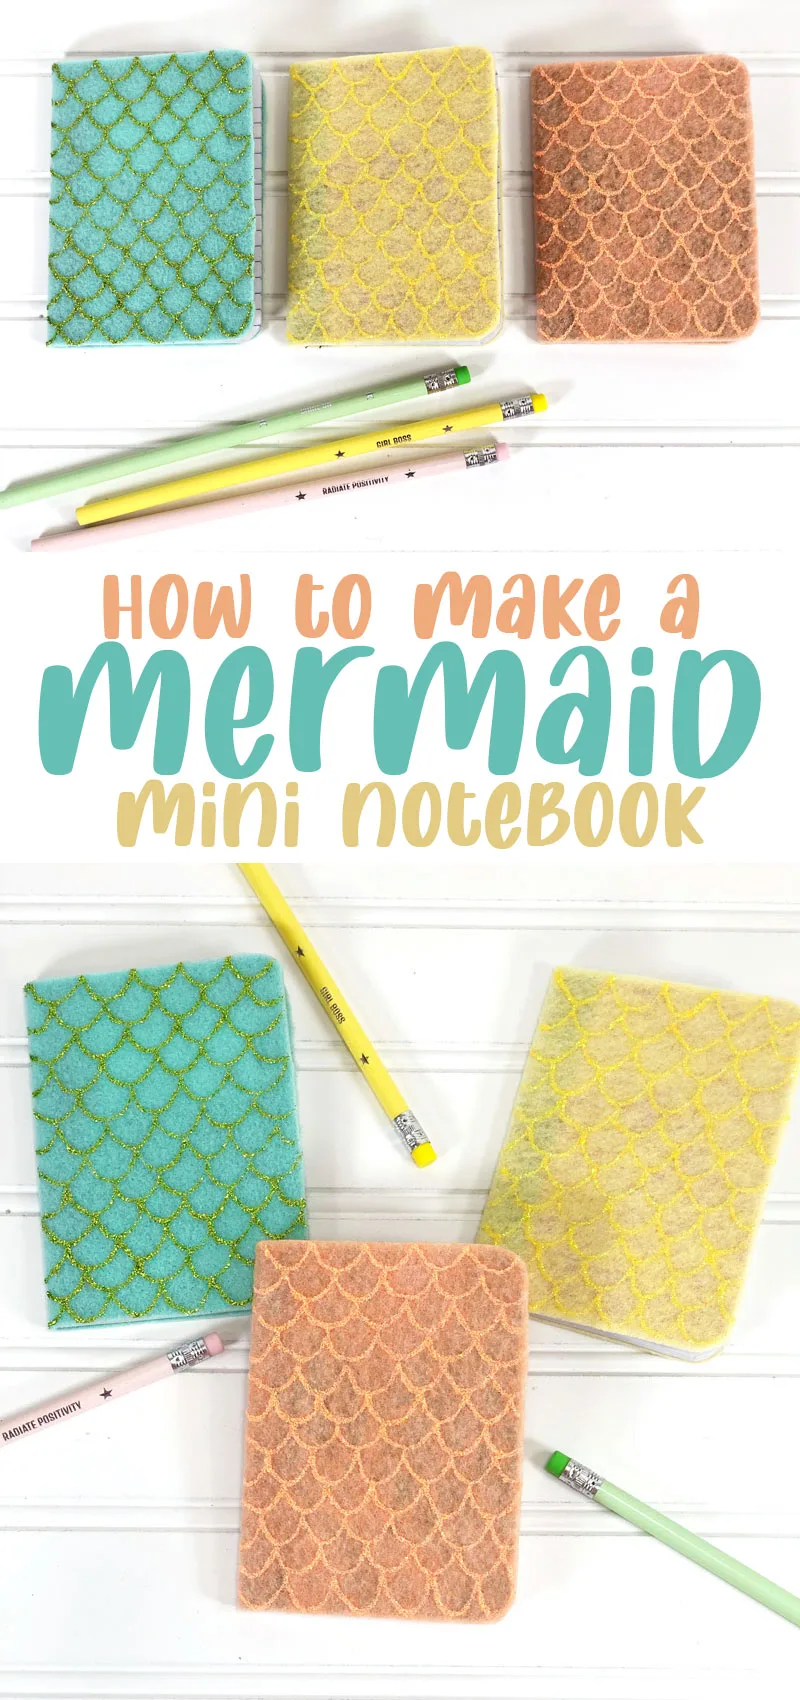 mermaid notebook tutorial hero image with text